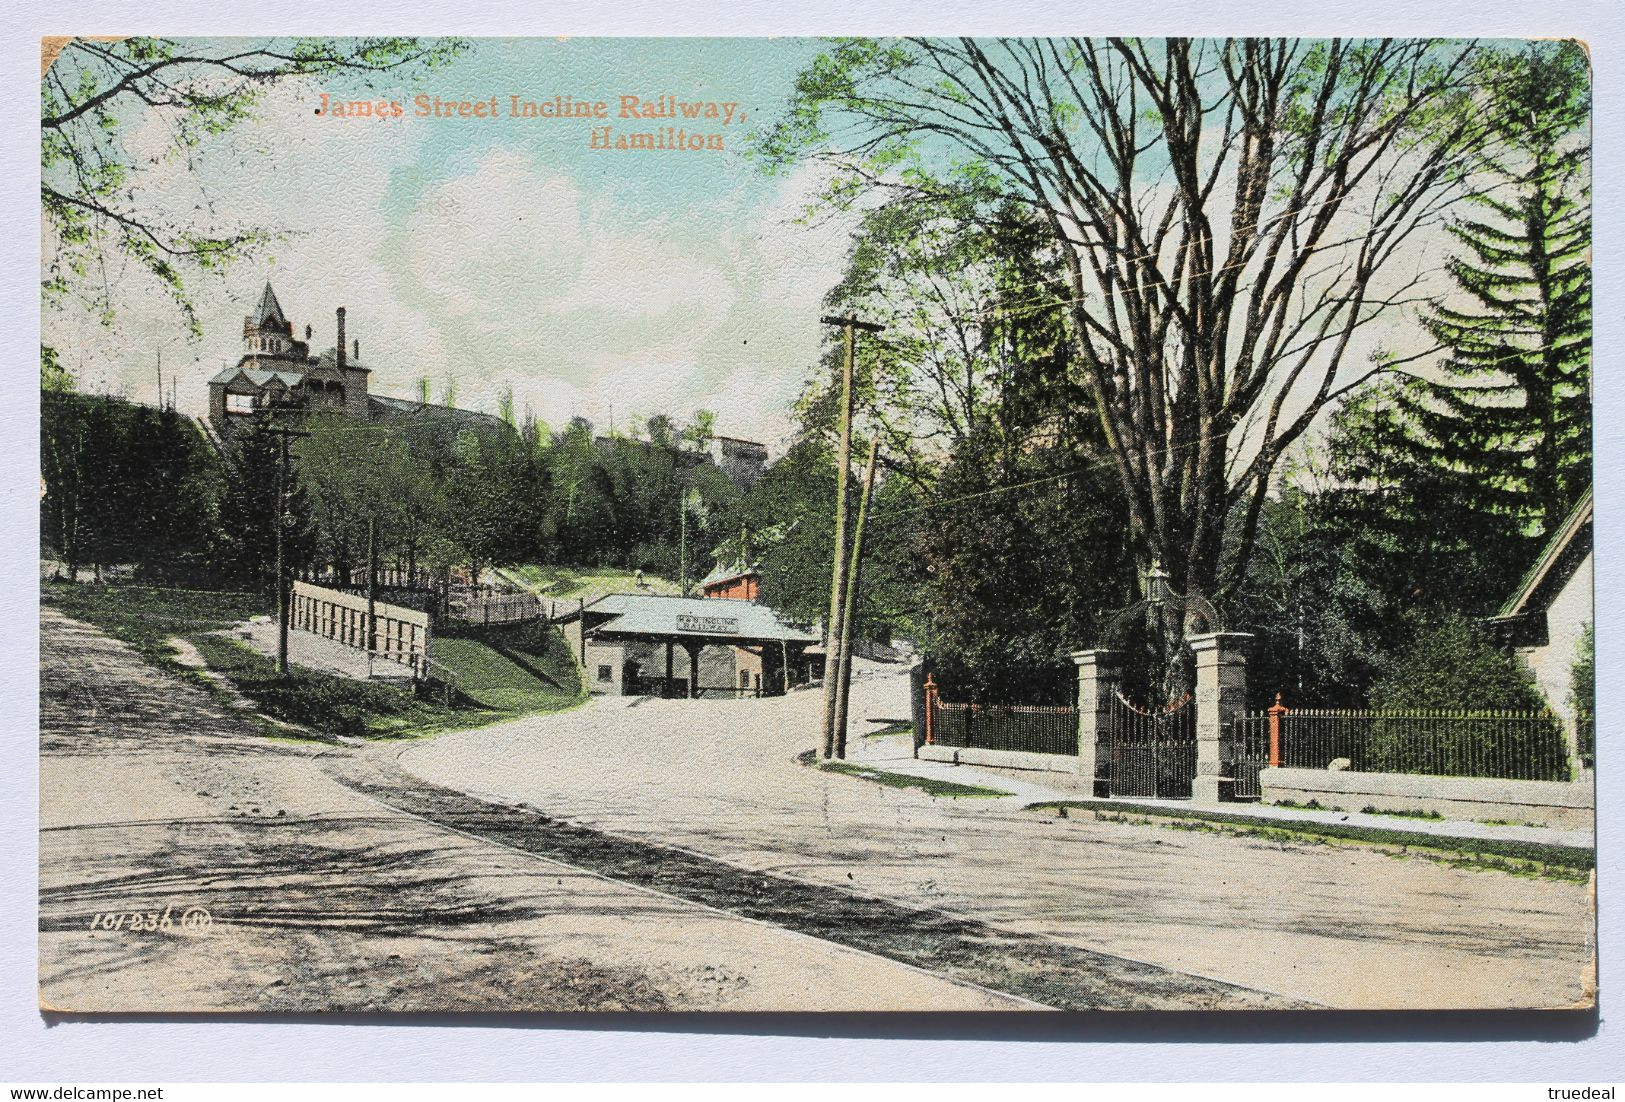 James Street Incline Railway, Hamilton, Ontario, Canada, 1907 - Hamilton